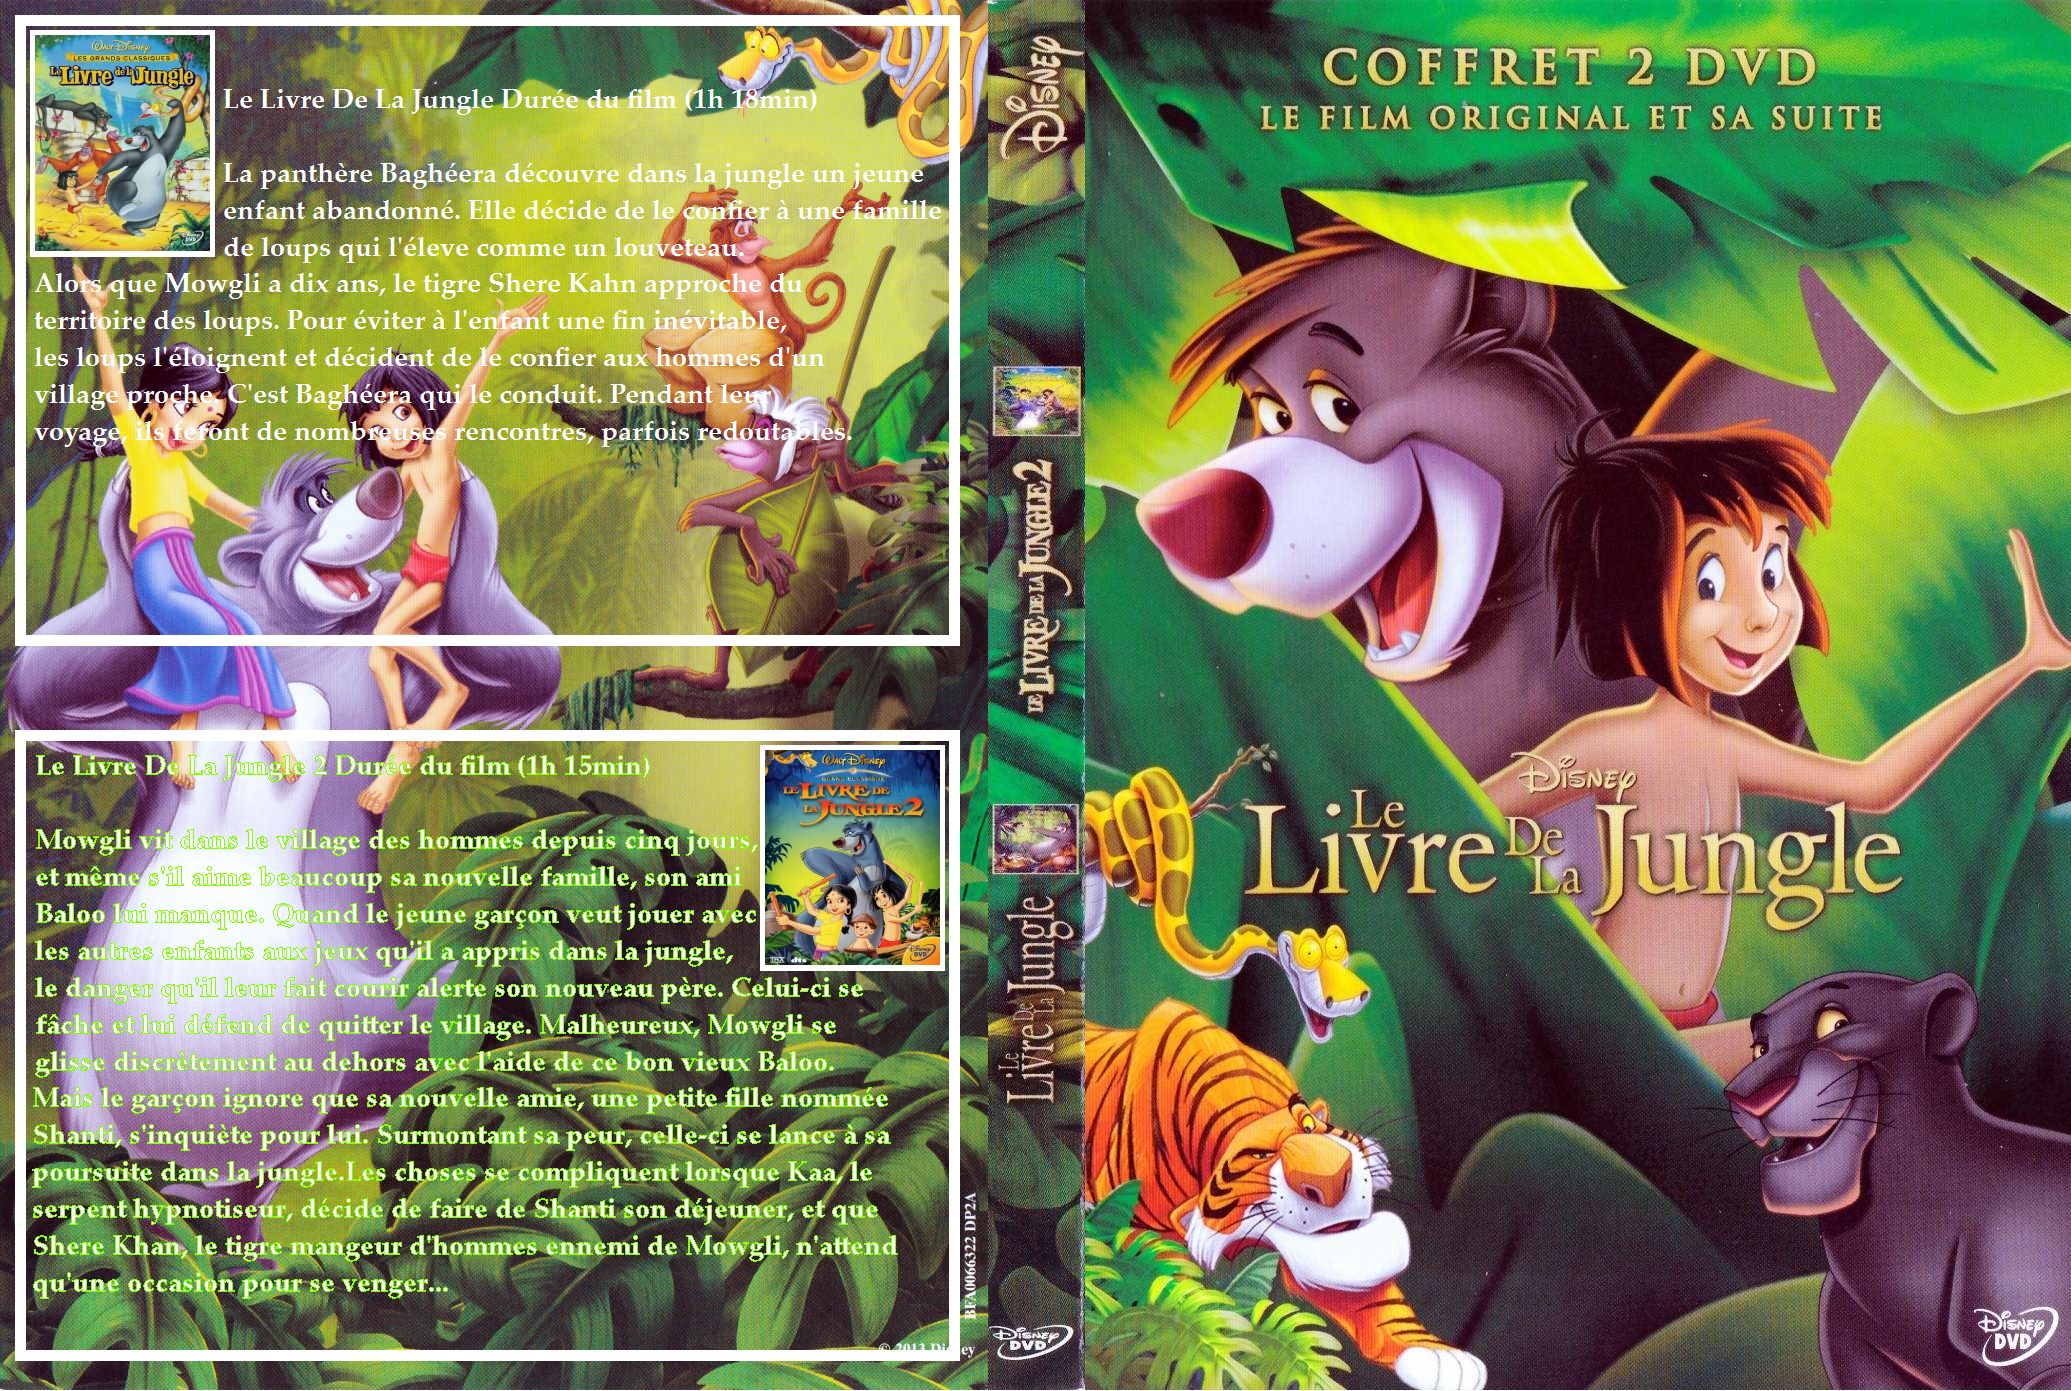 Jaquette DVD Le Livre de la jungle 1 & 2 v2 Custom 